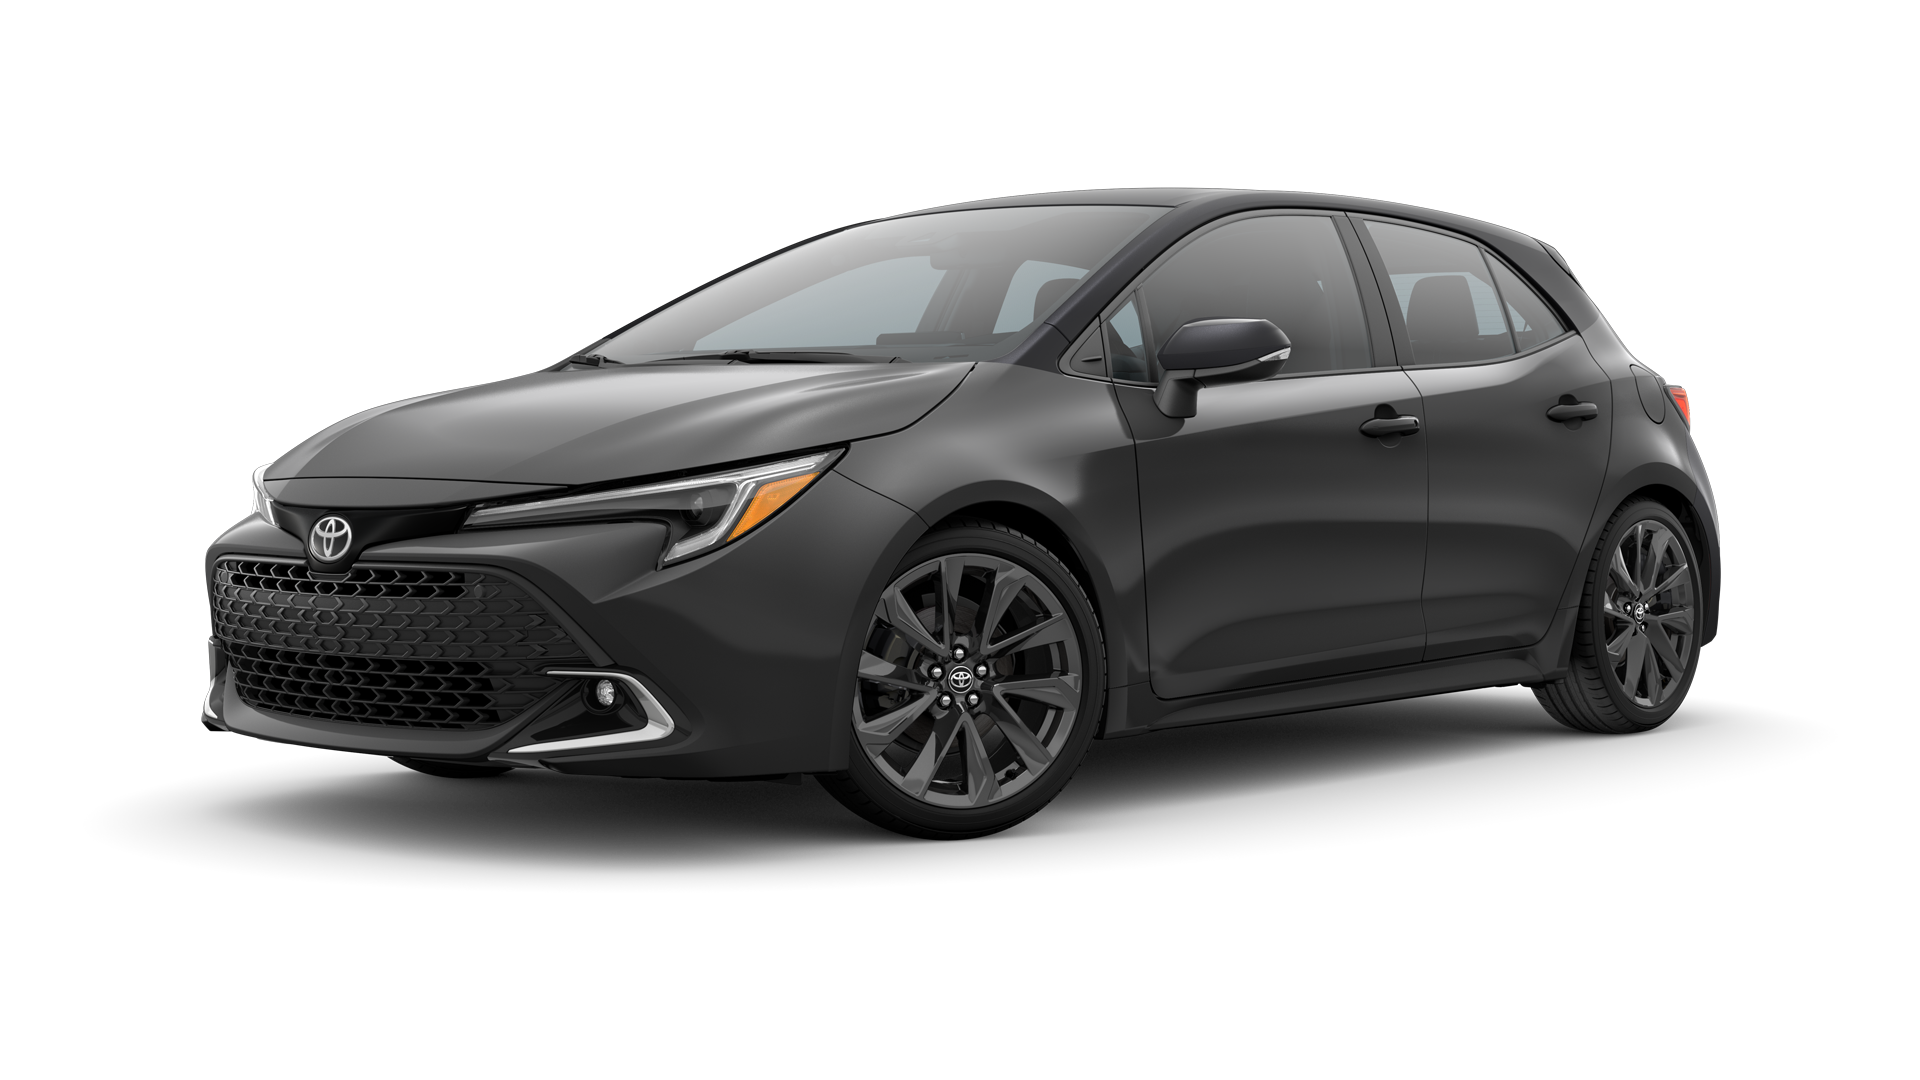 2024 Toyota Hatchback in Magnetic Gray Metallic/Midnight Black Metallic Roof.